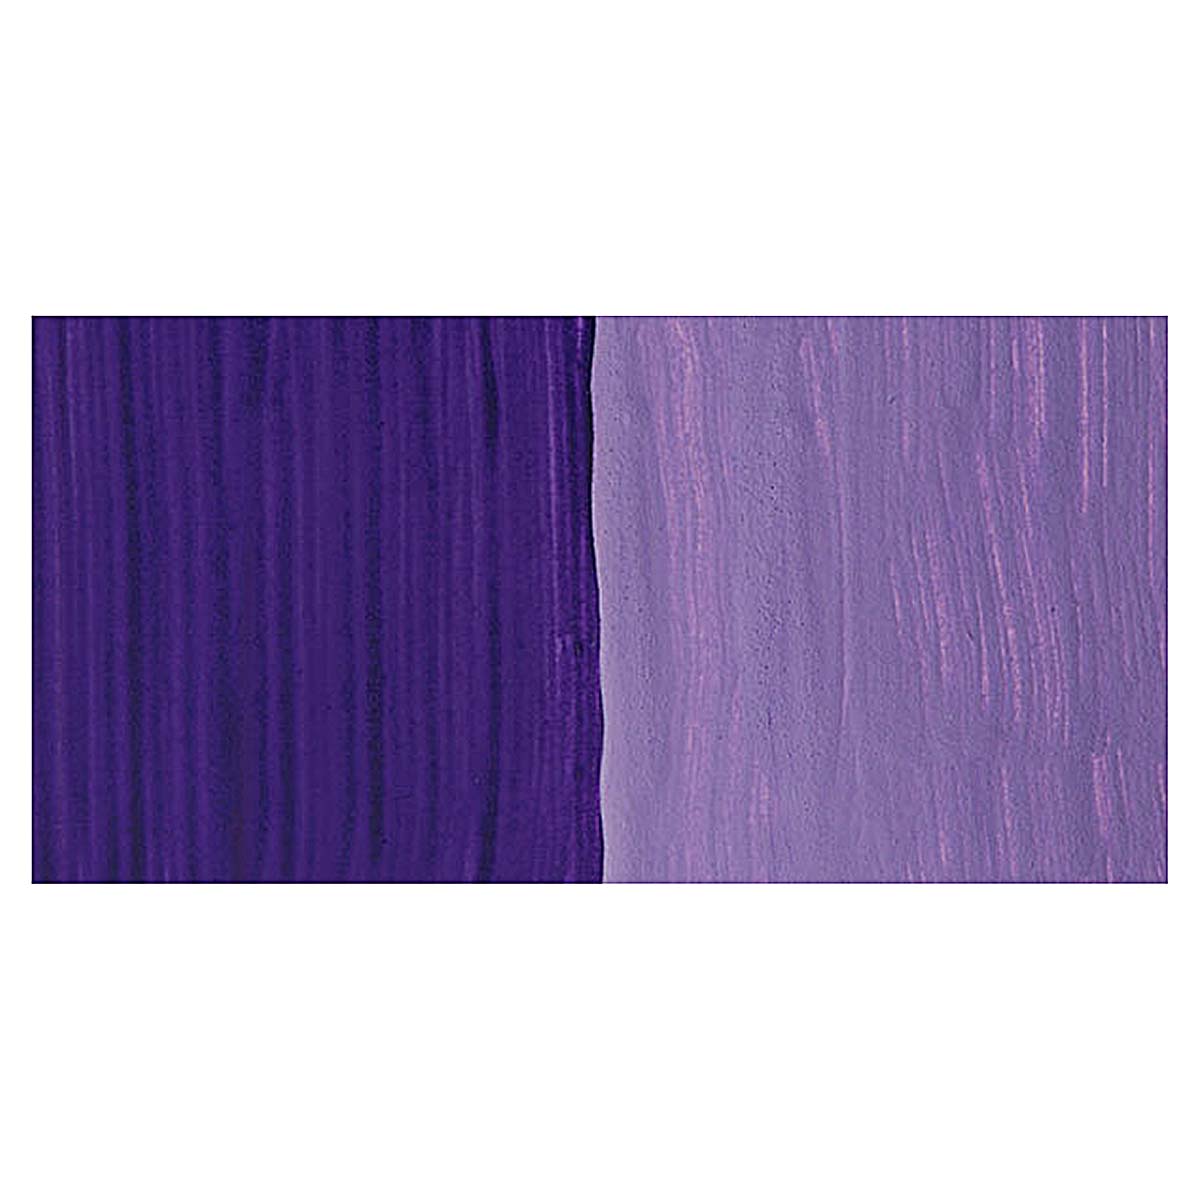  Deco Art DA-327 Americana Acrylic Paint, 2 oz, Purple Rain